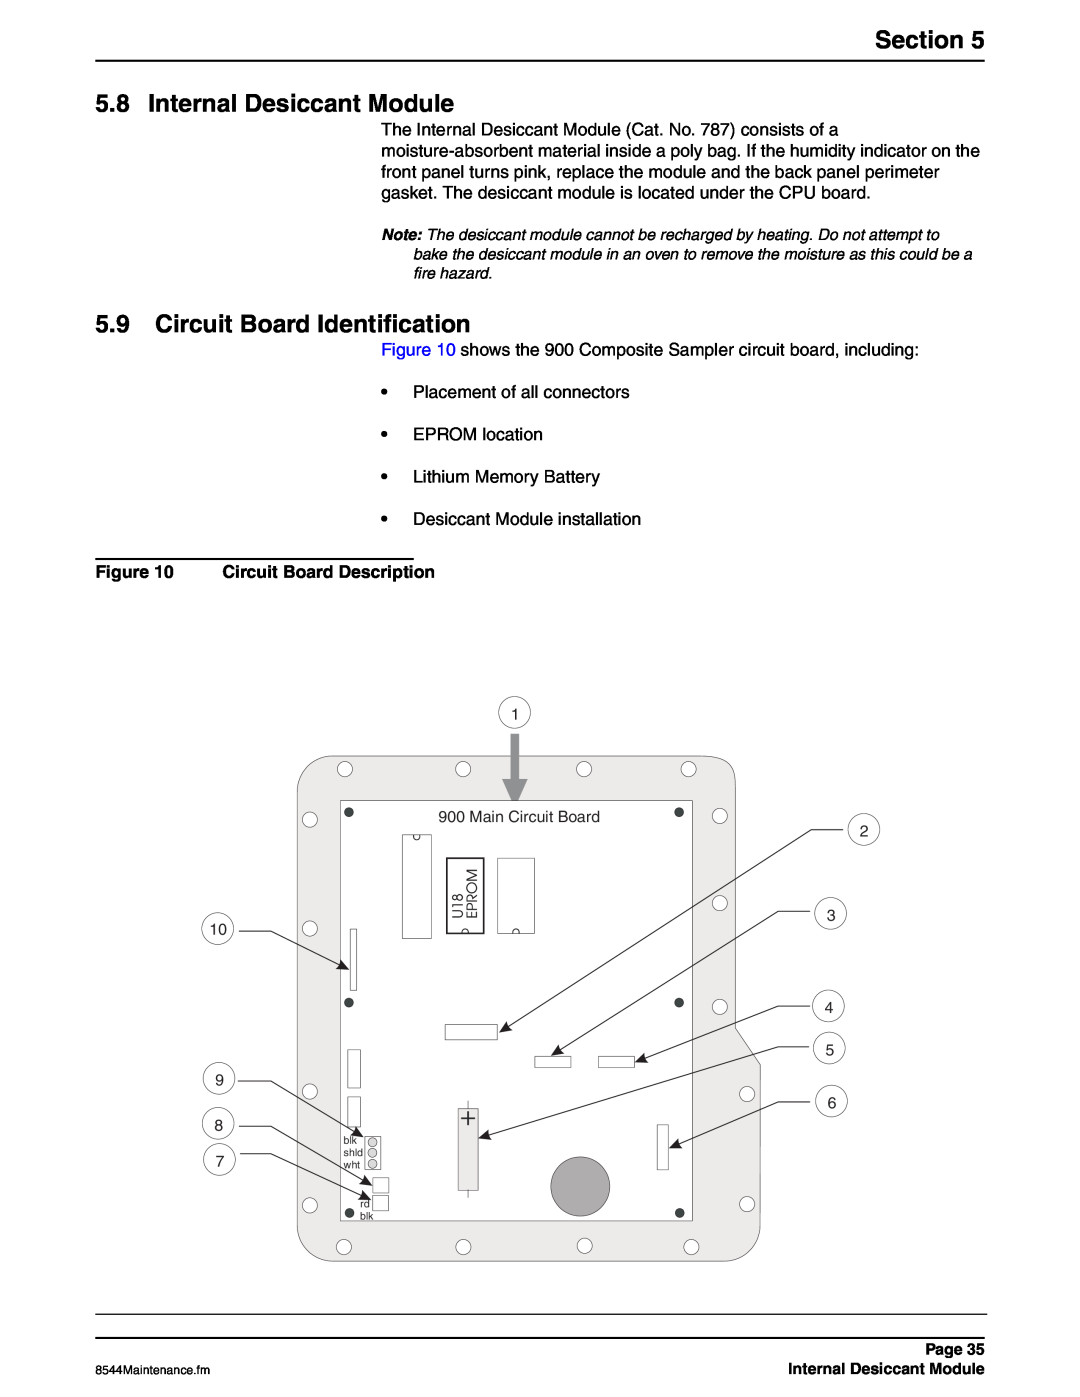 Hach 900 manual 8 Internal Desiccant Module, 5.9Circuit Board Identification, Circuit Board Description 